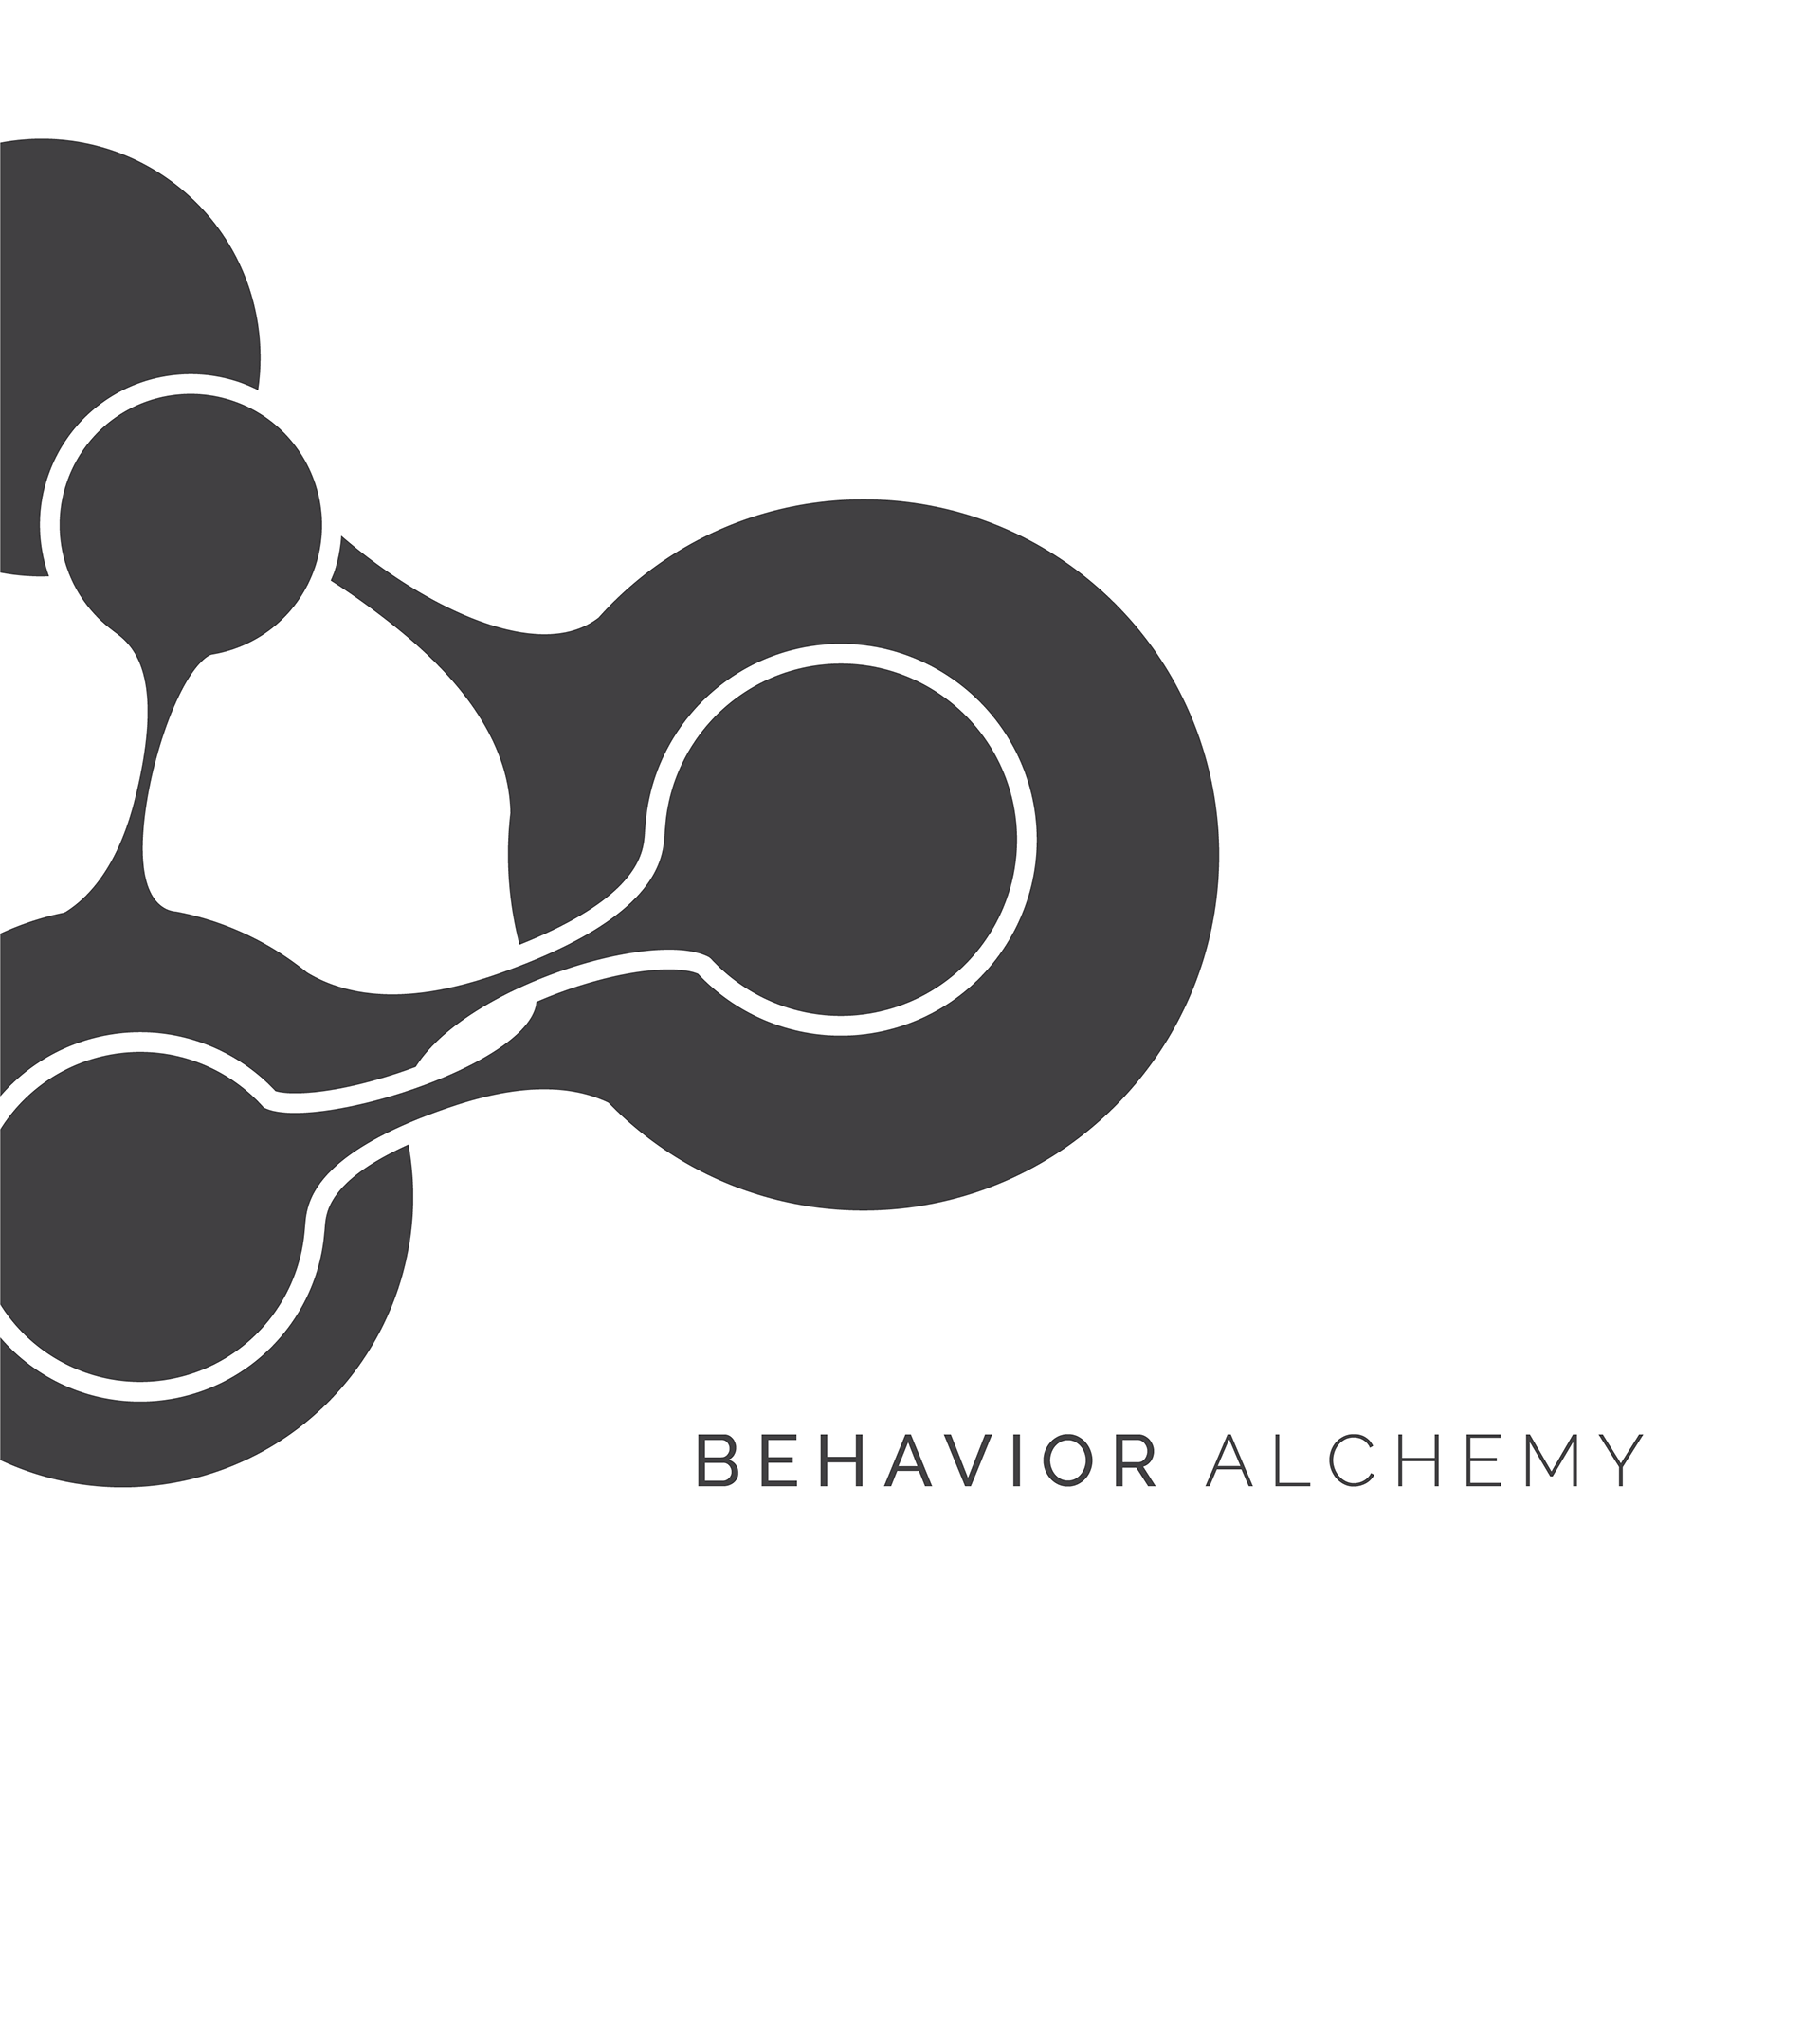 Behavior Logo - danl durall - Behavior Alchemy Logos Final